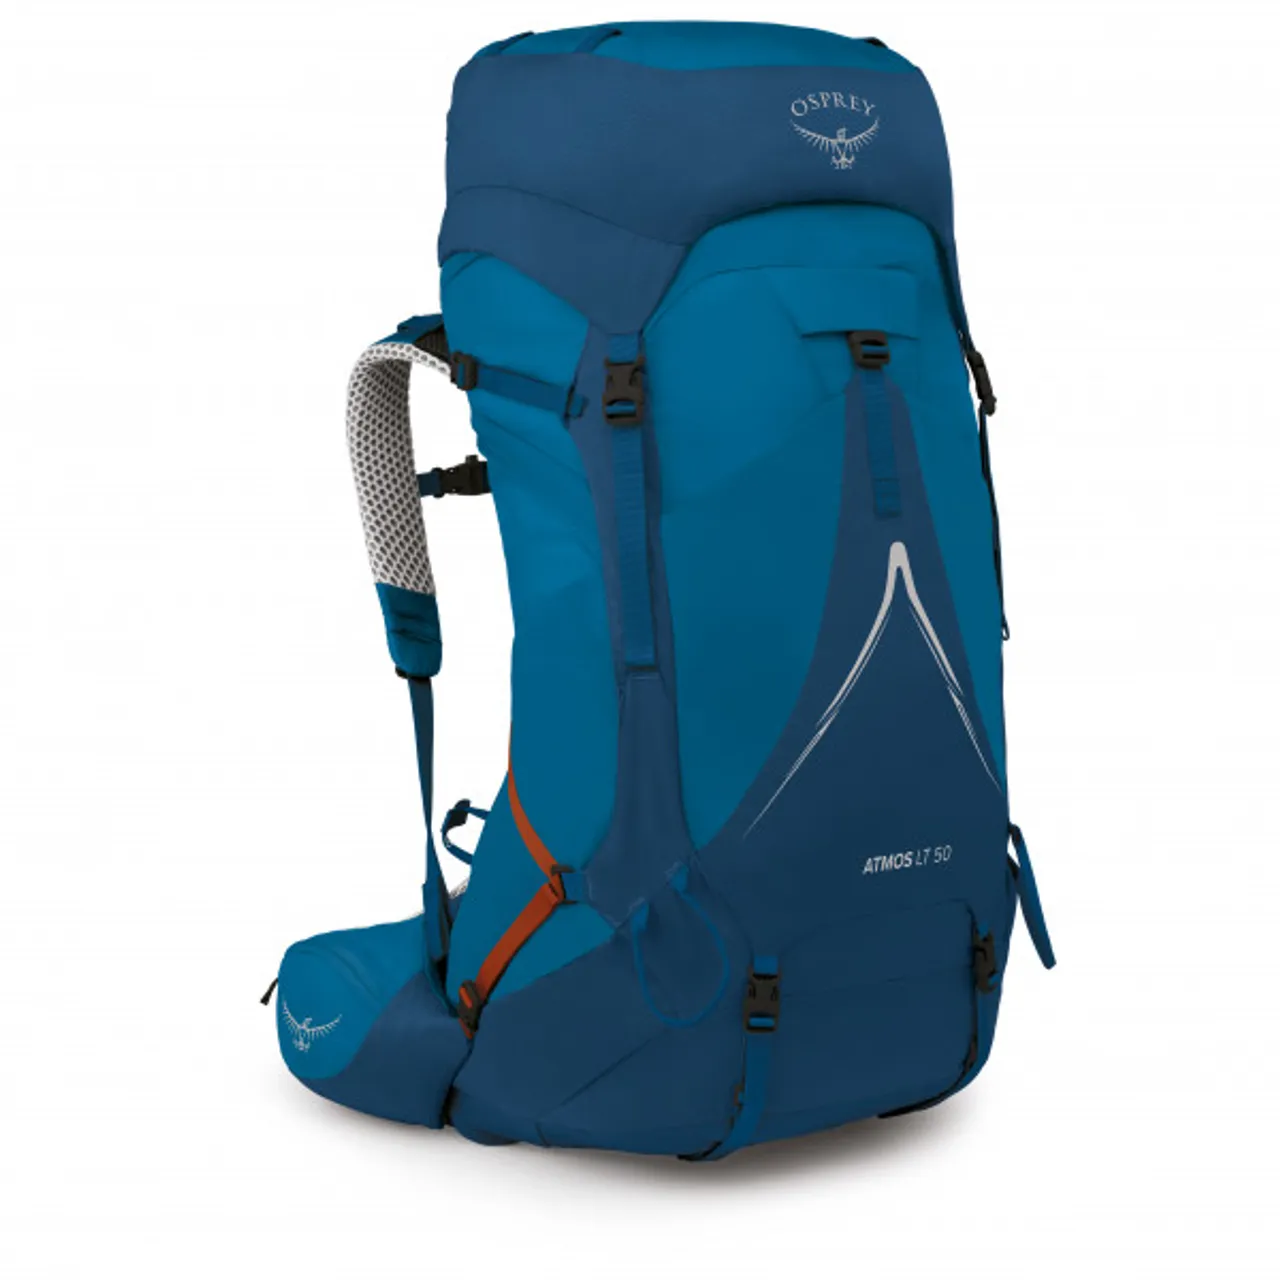 Osprey - Atmos AG LT 50 - Walking backpack size 53 l - L/XL, blue